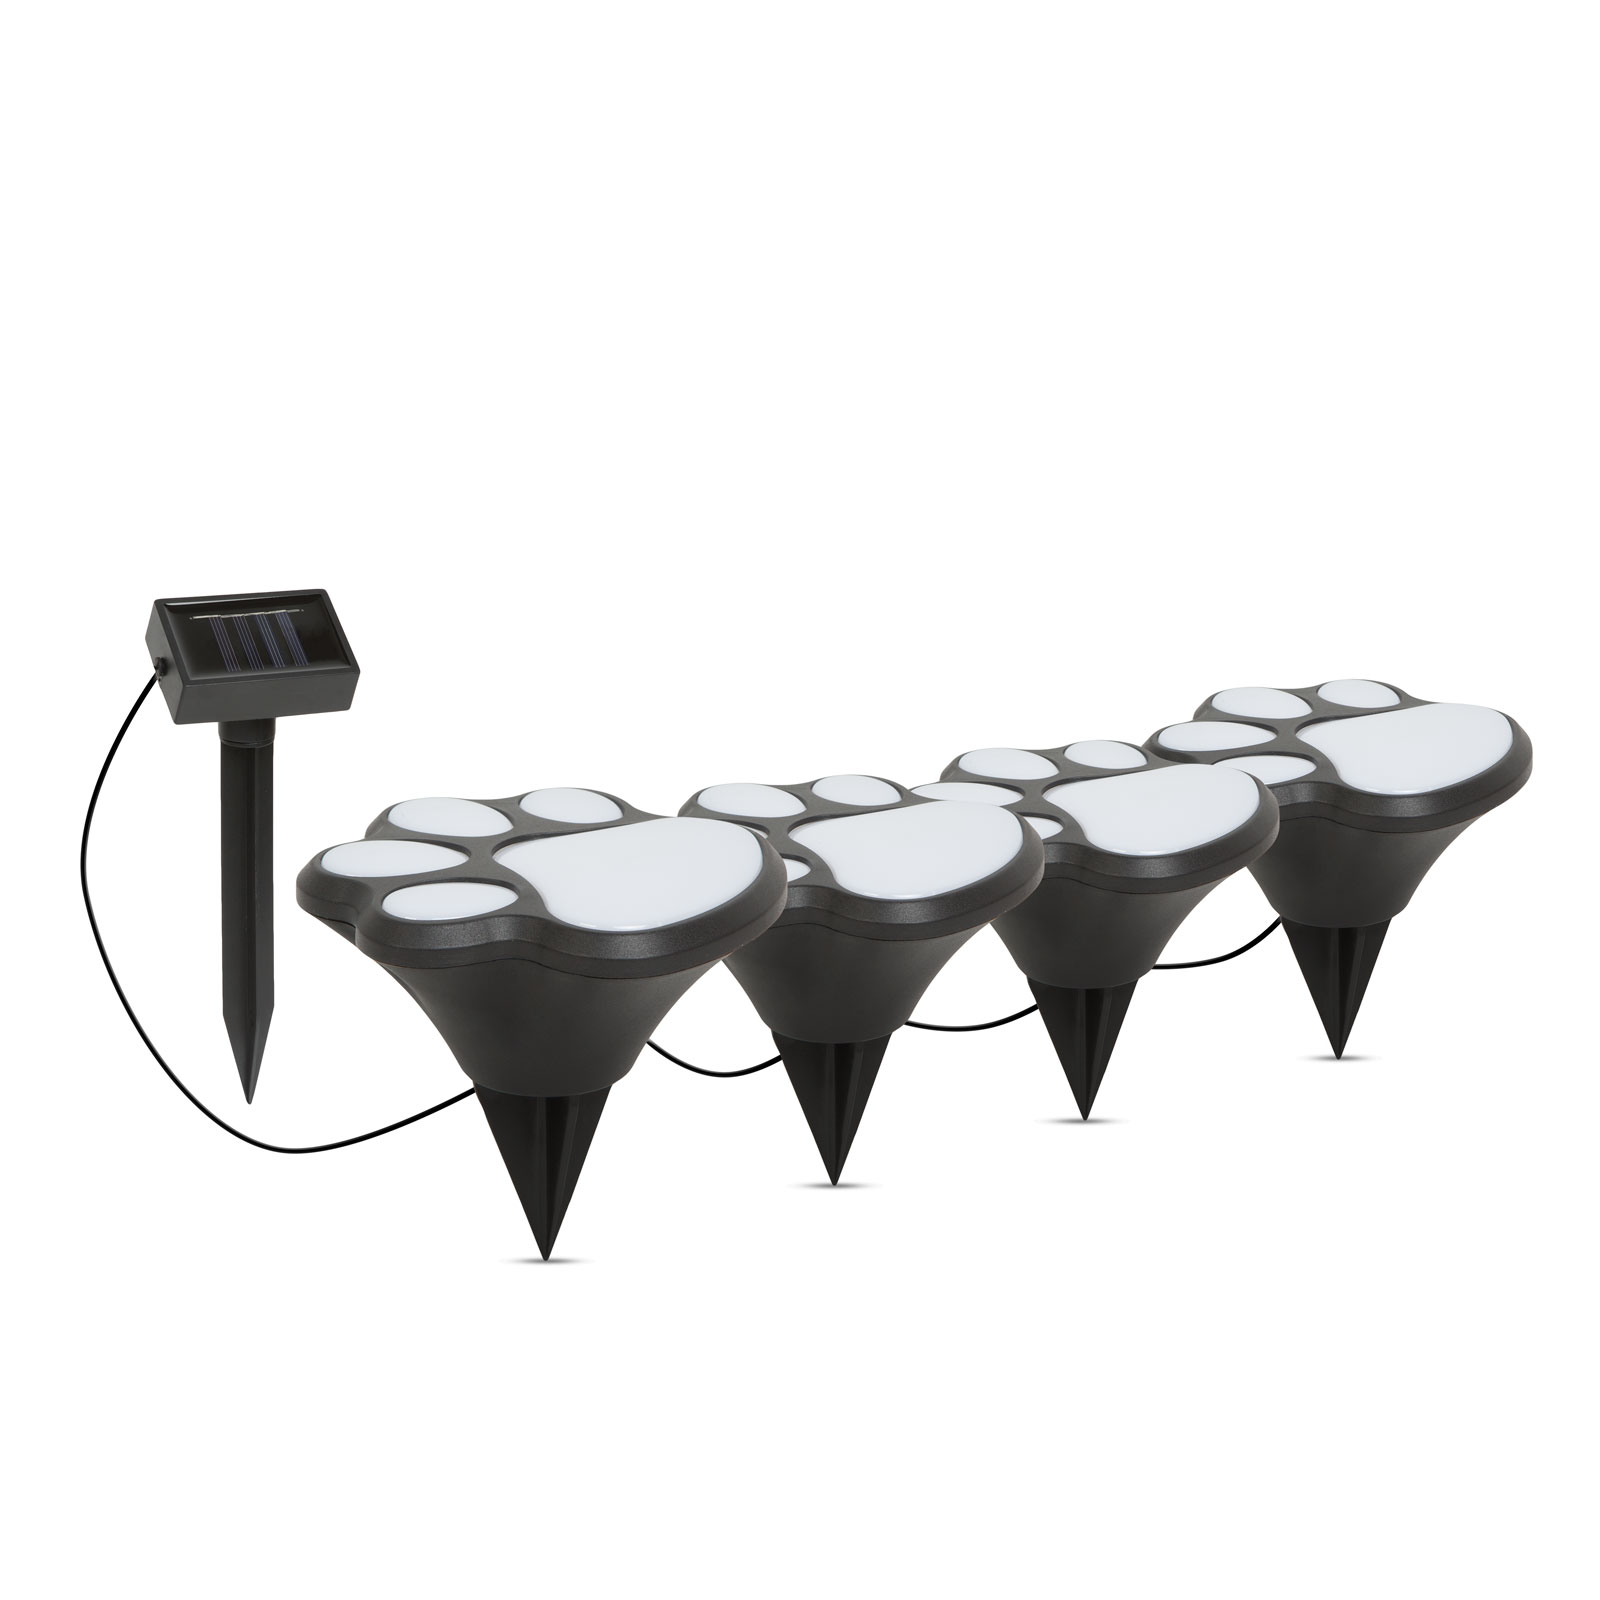 LED solar lamp - dog footprint, stake- plastic - black - 360 cm thumb